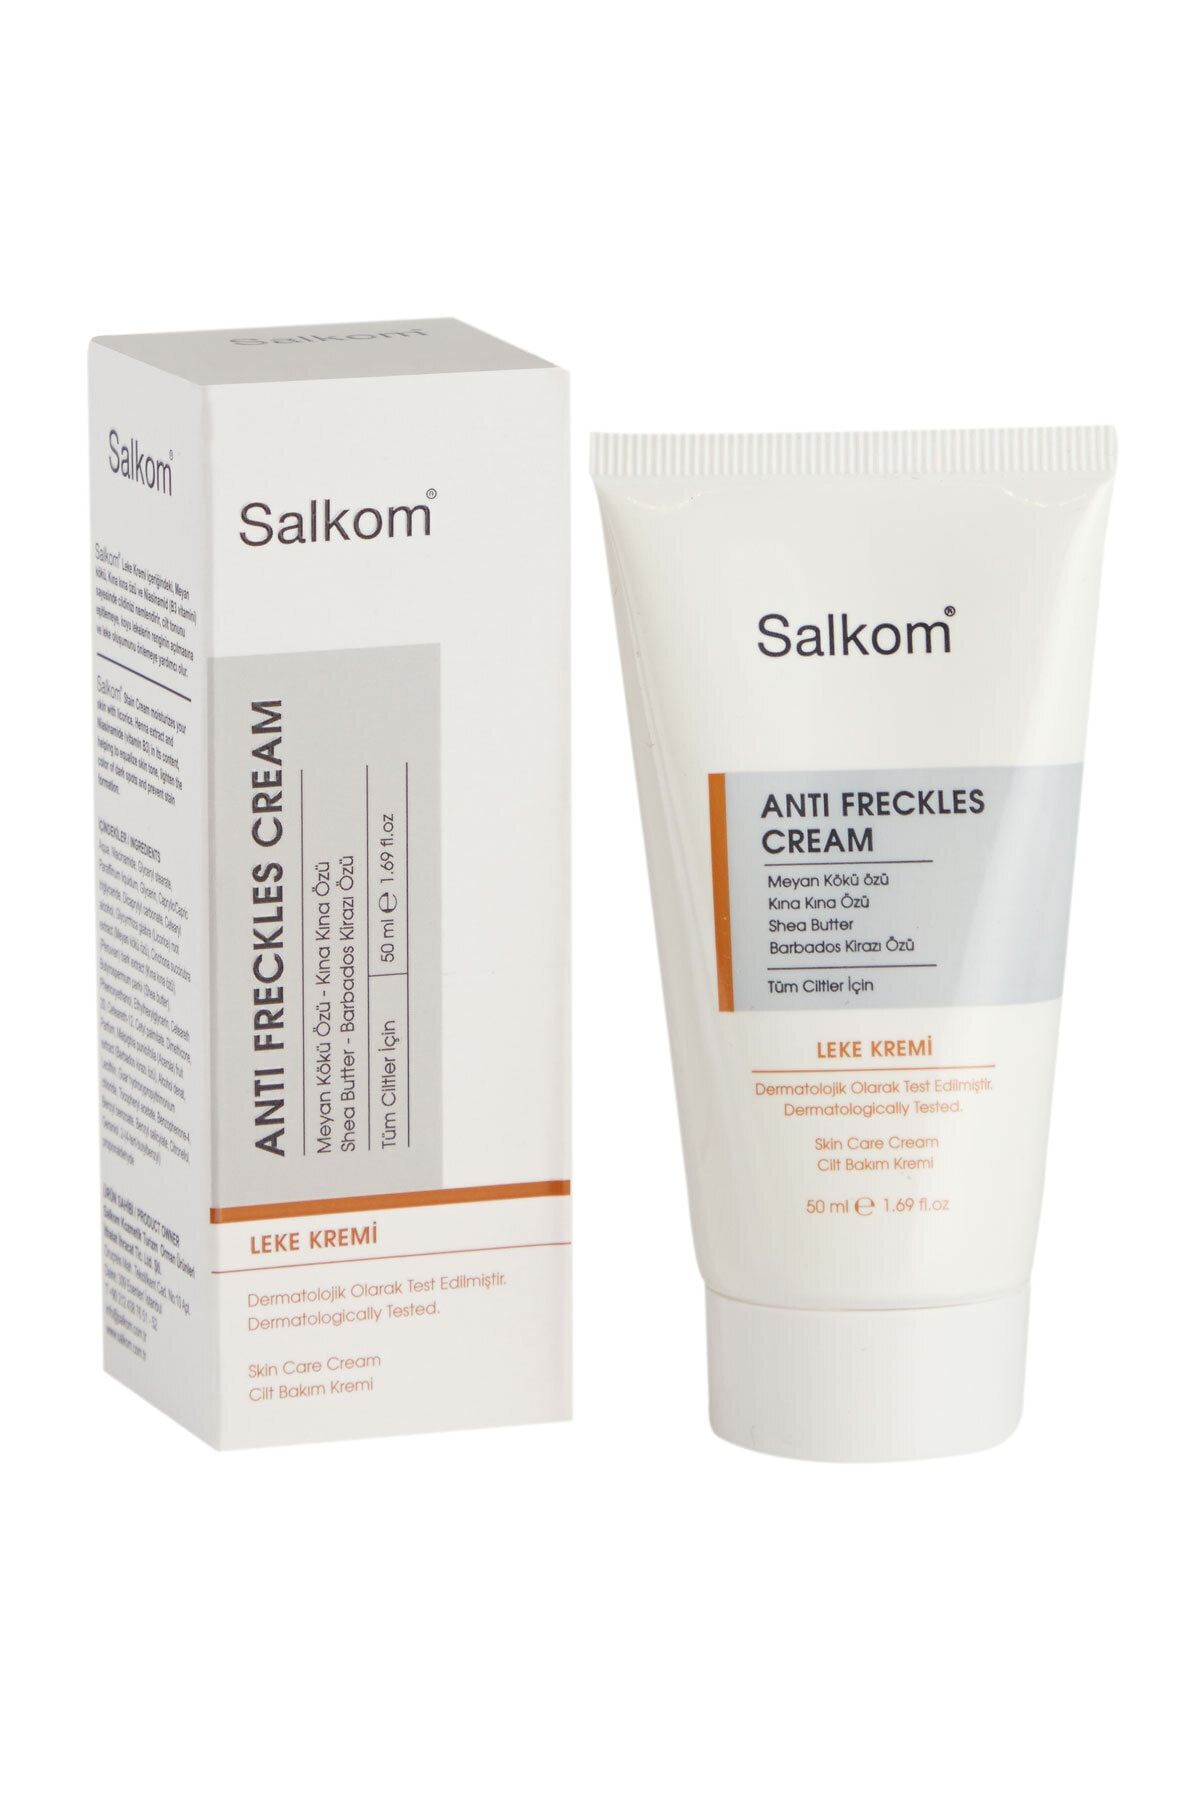 Salkom Anti Freckless Cream